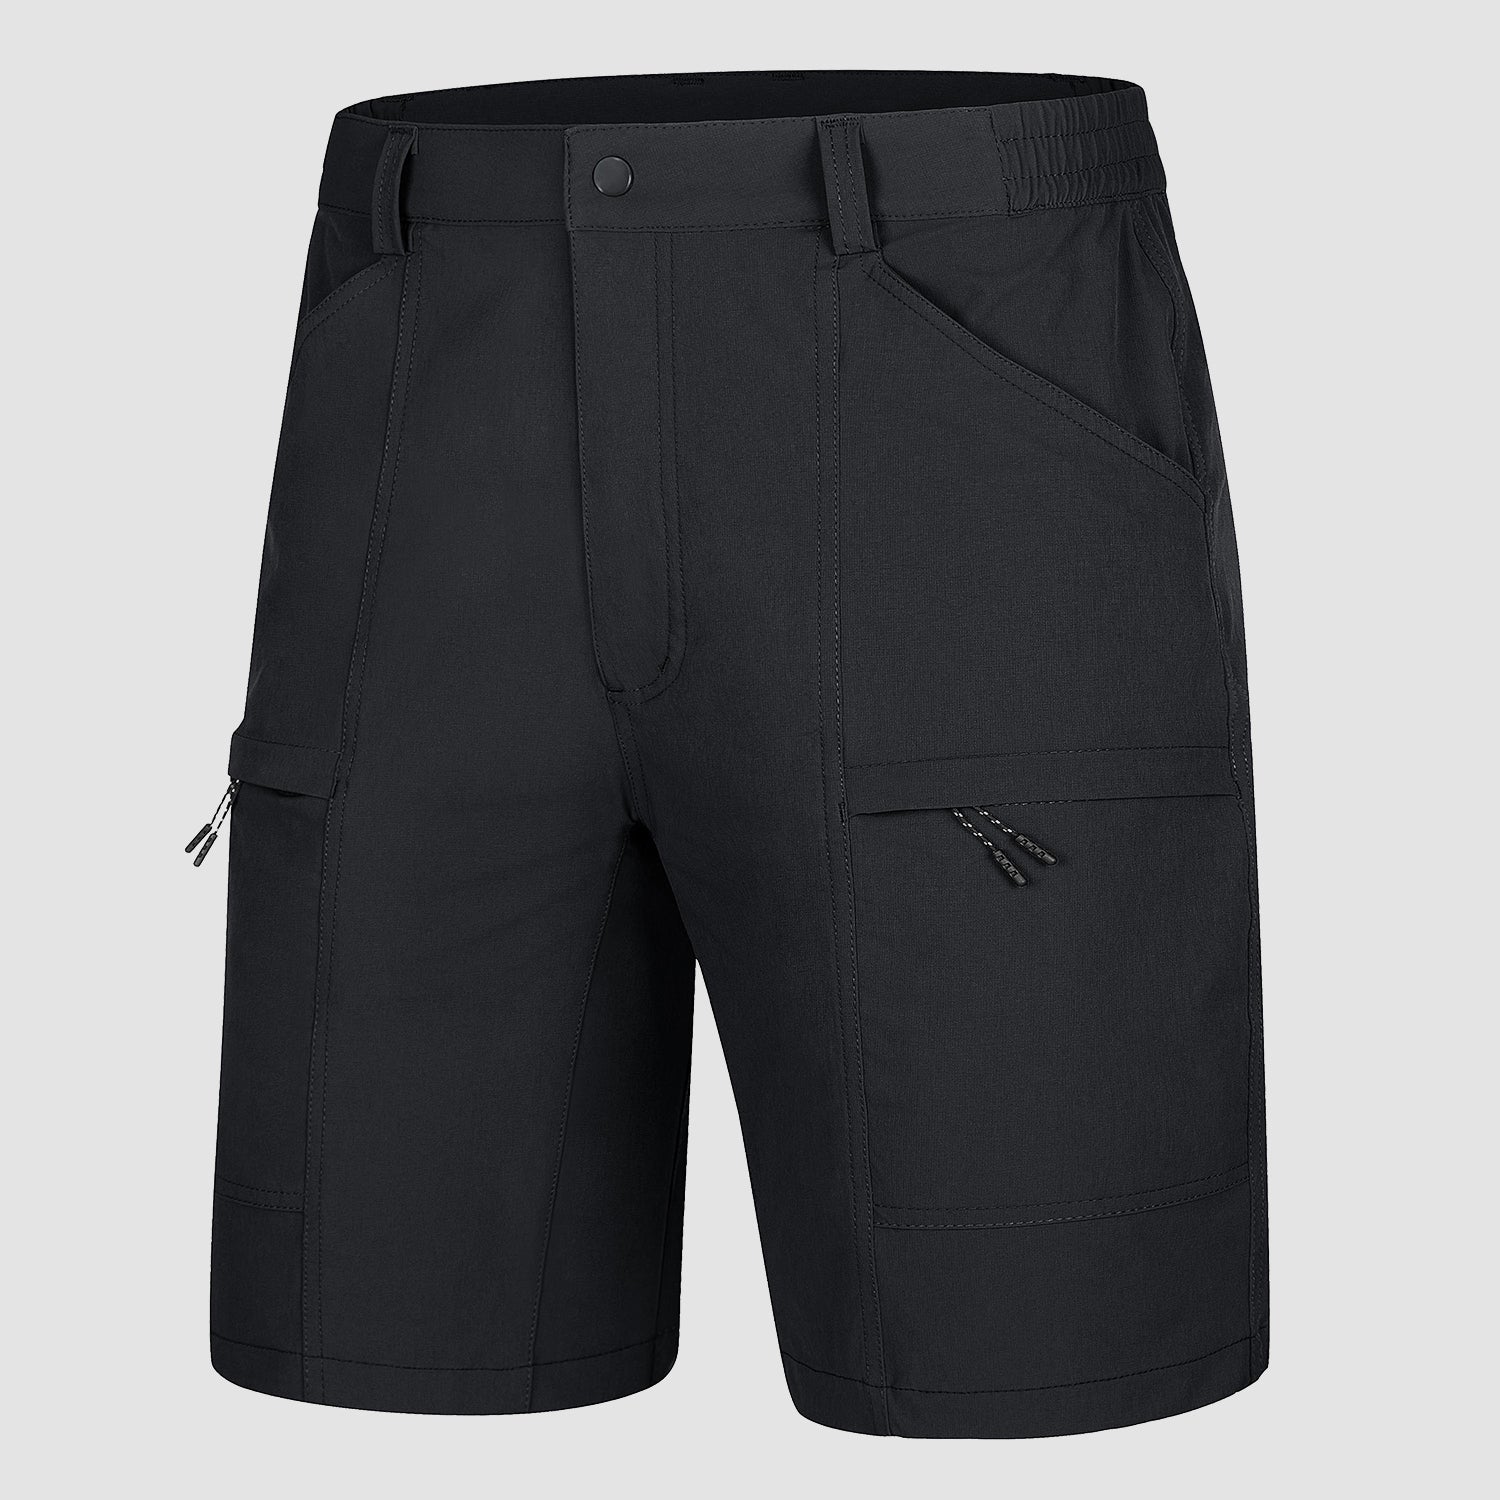 Men's Cargo Shorts, Casual Shorts for Men